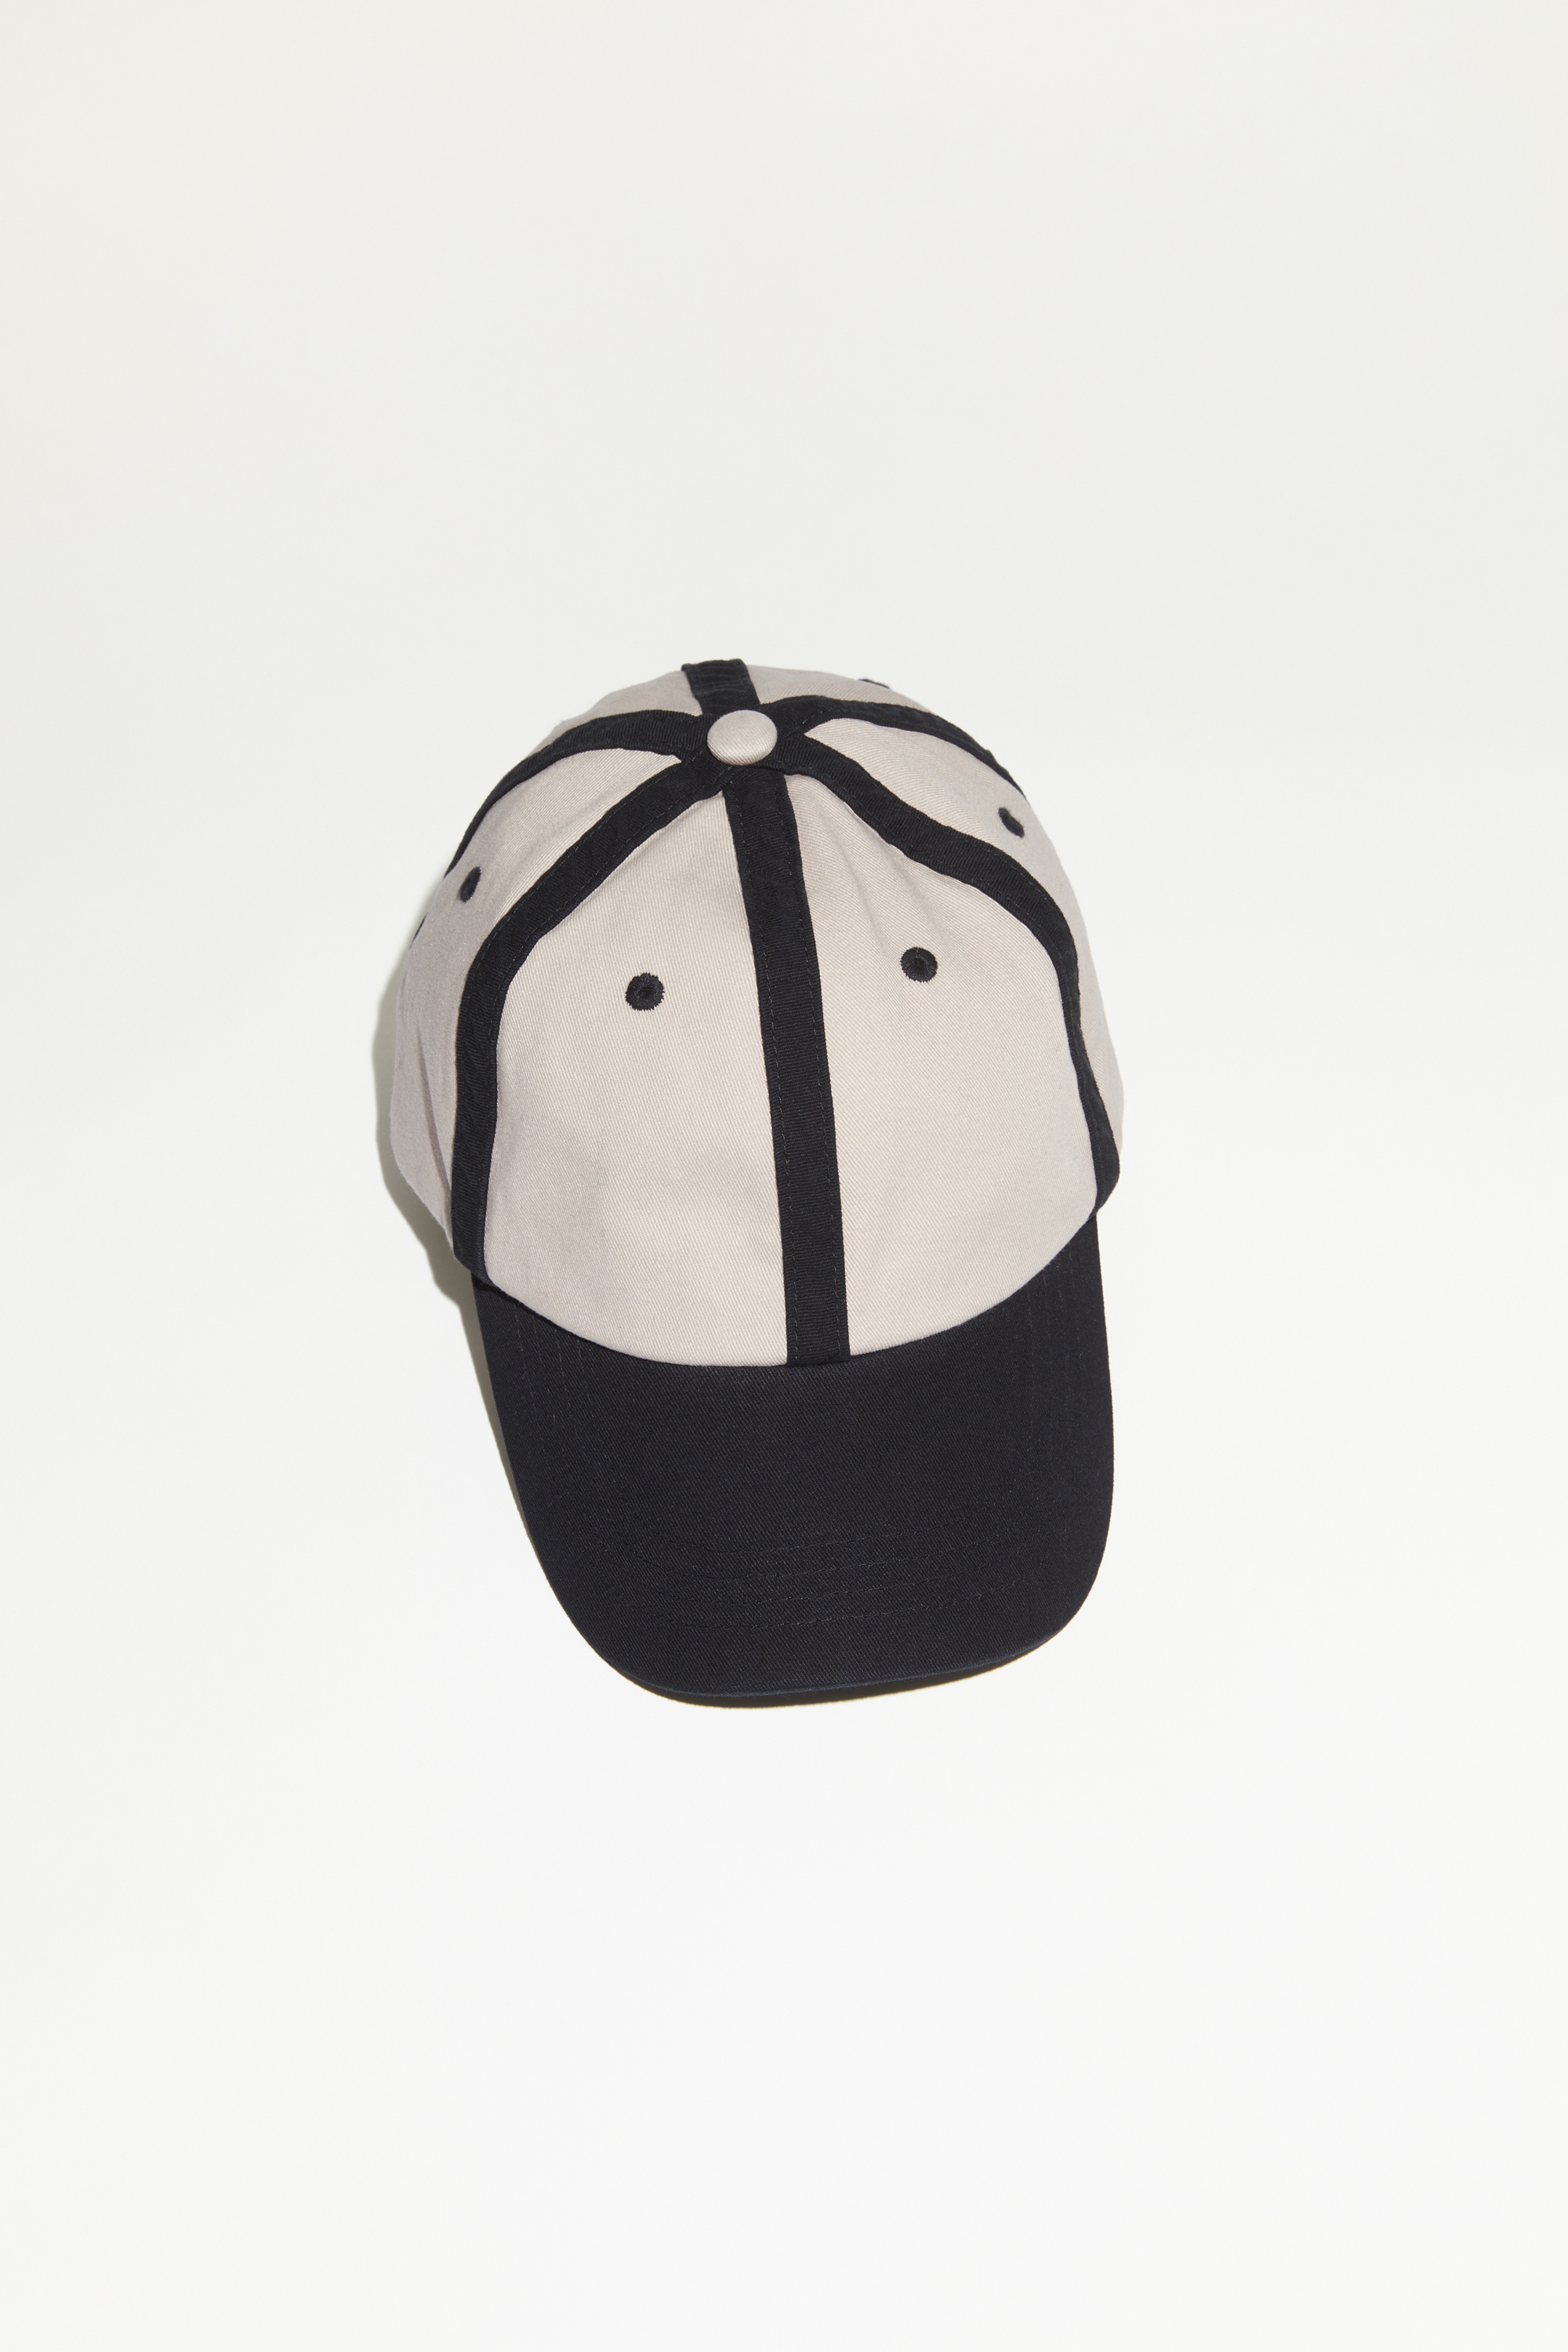 ACNE STUDIOS ACNE STUDIOS FN-UX-HATS000213 BLACK/WHITE COTTON BASEBALL CAP